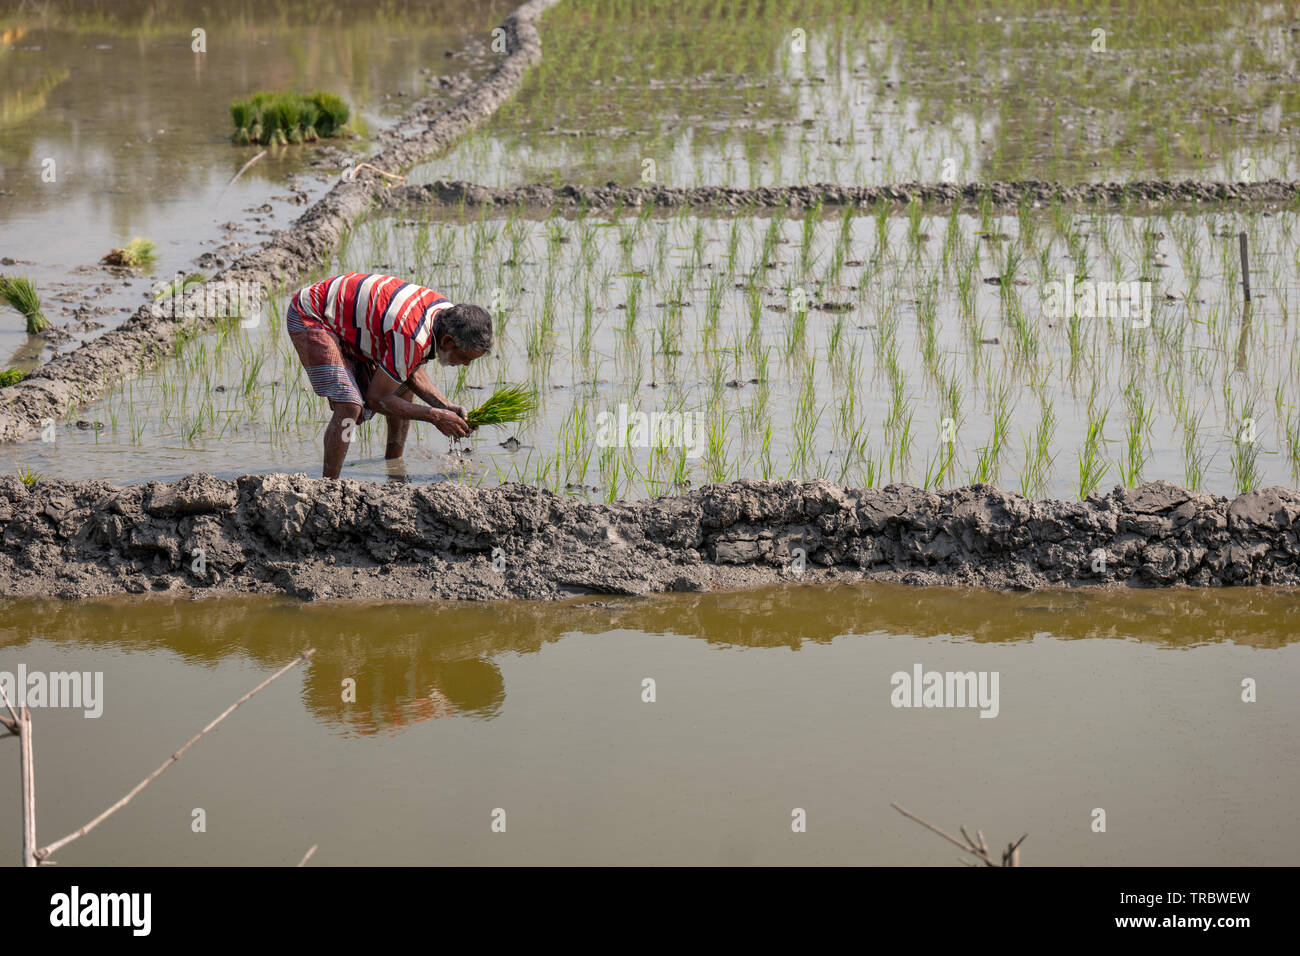 Planting rice in rural Bangladesh. Stock Photo